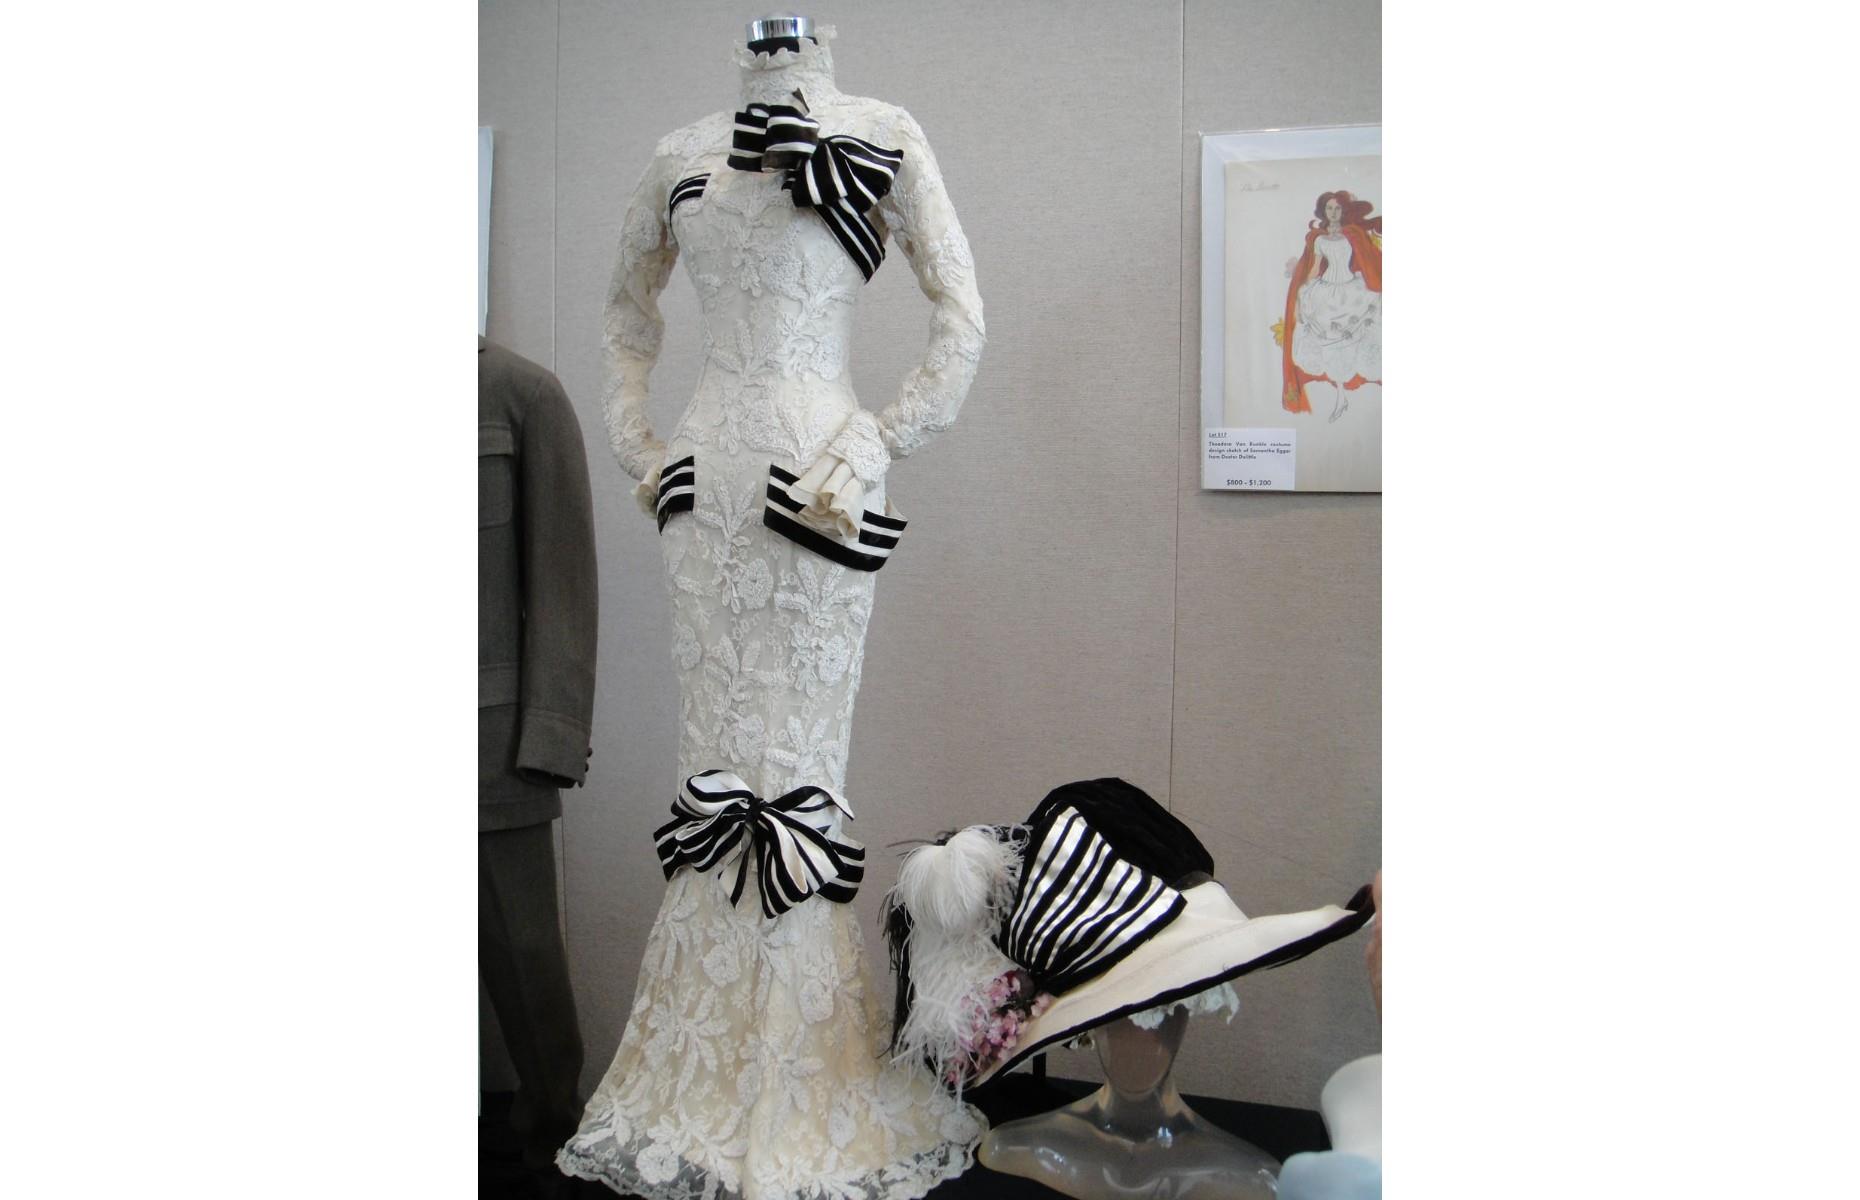 My Fair Lady (1964) Ascot dress: $3.7 million (£2.4m)